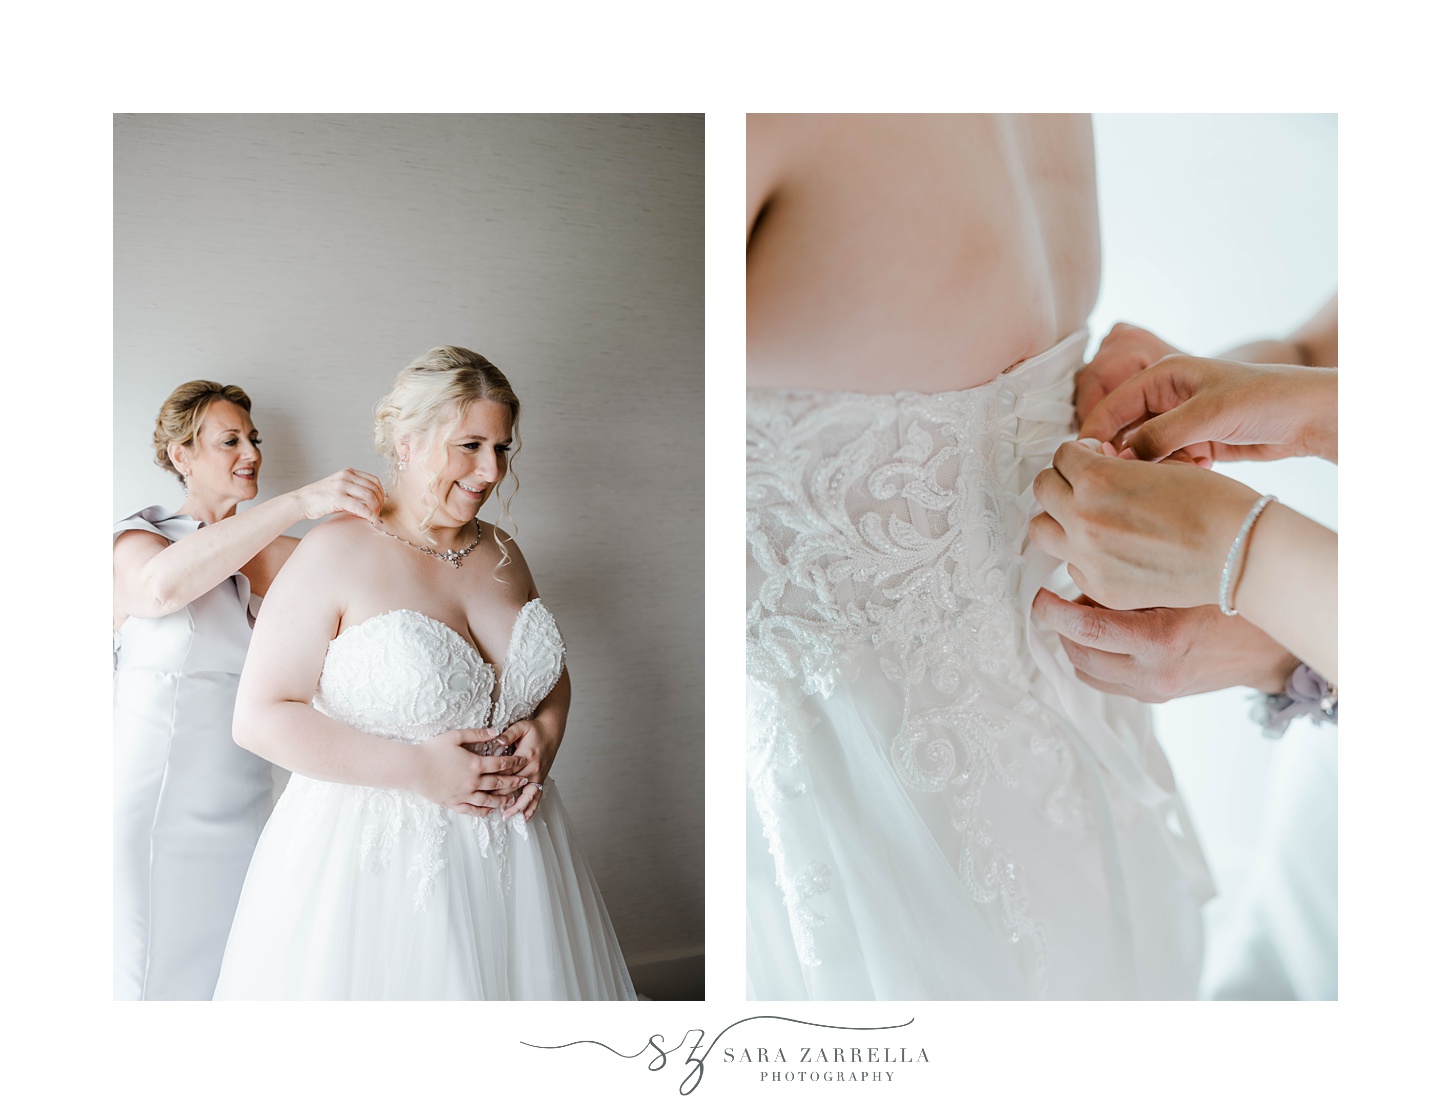 mother helps bride with wedding gown before Gurney’s Newport wedding